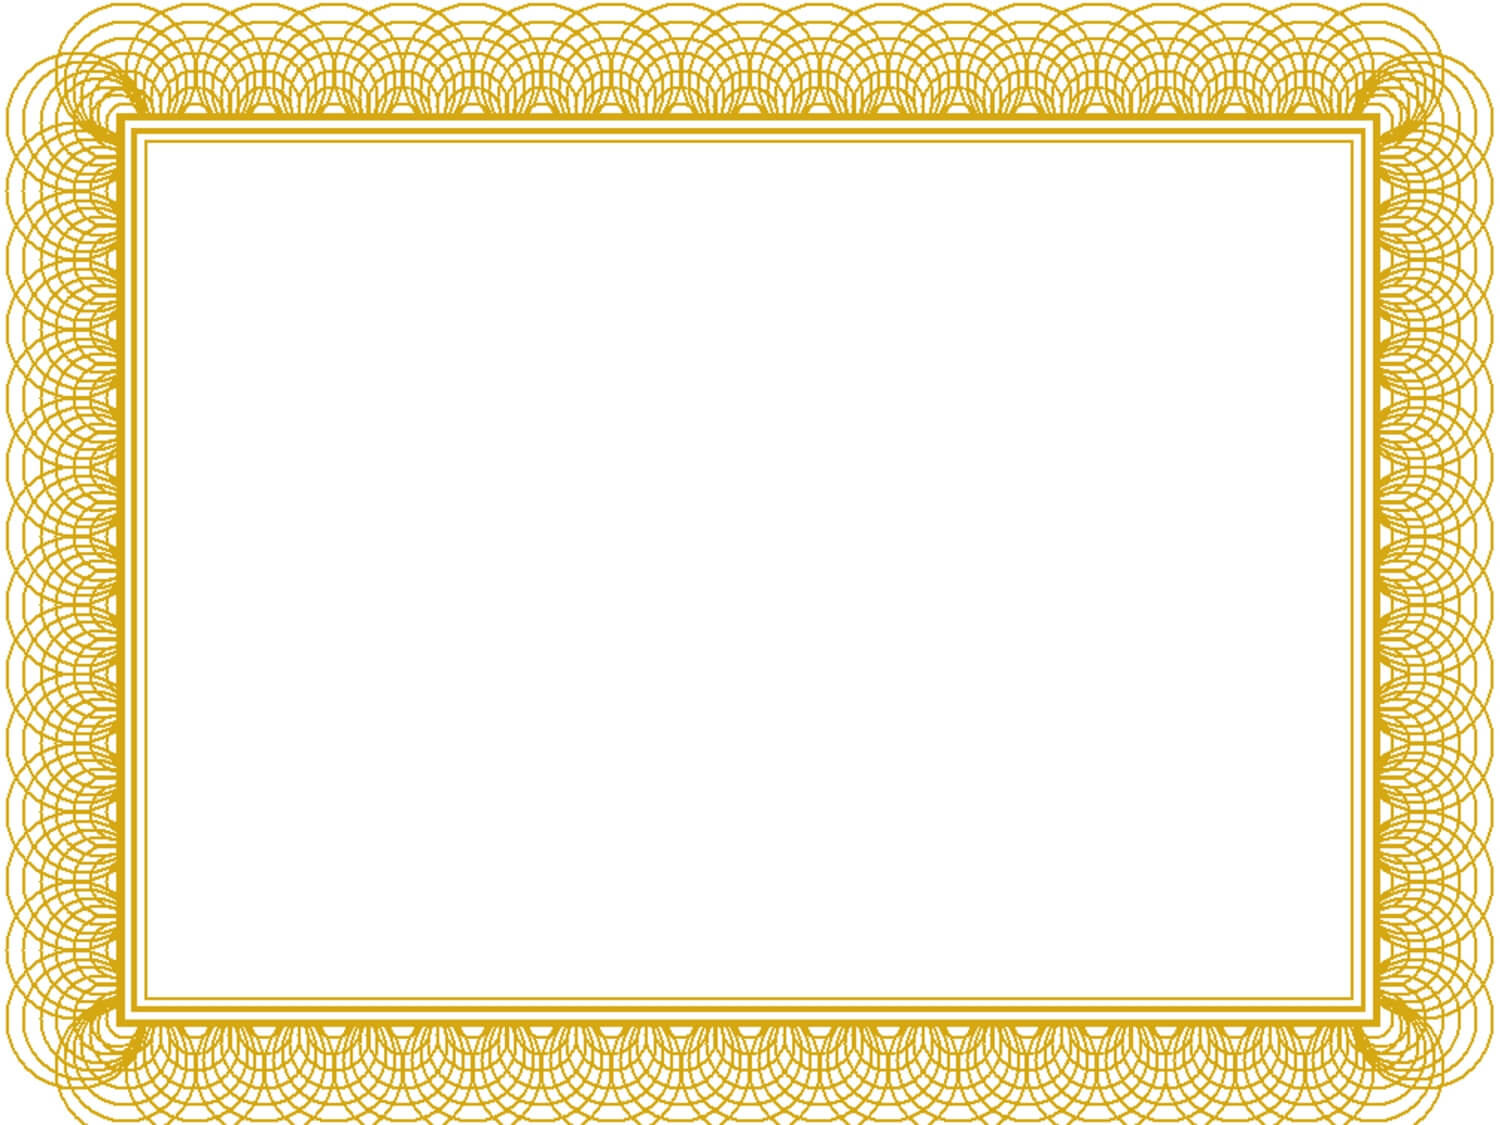 Award Certificate Border Template Pertaining To Gold Regarding Award Certificate Border Template